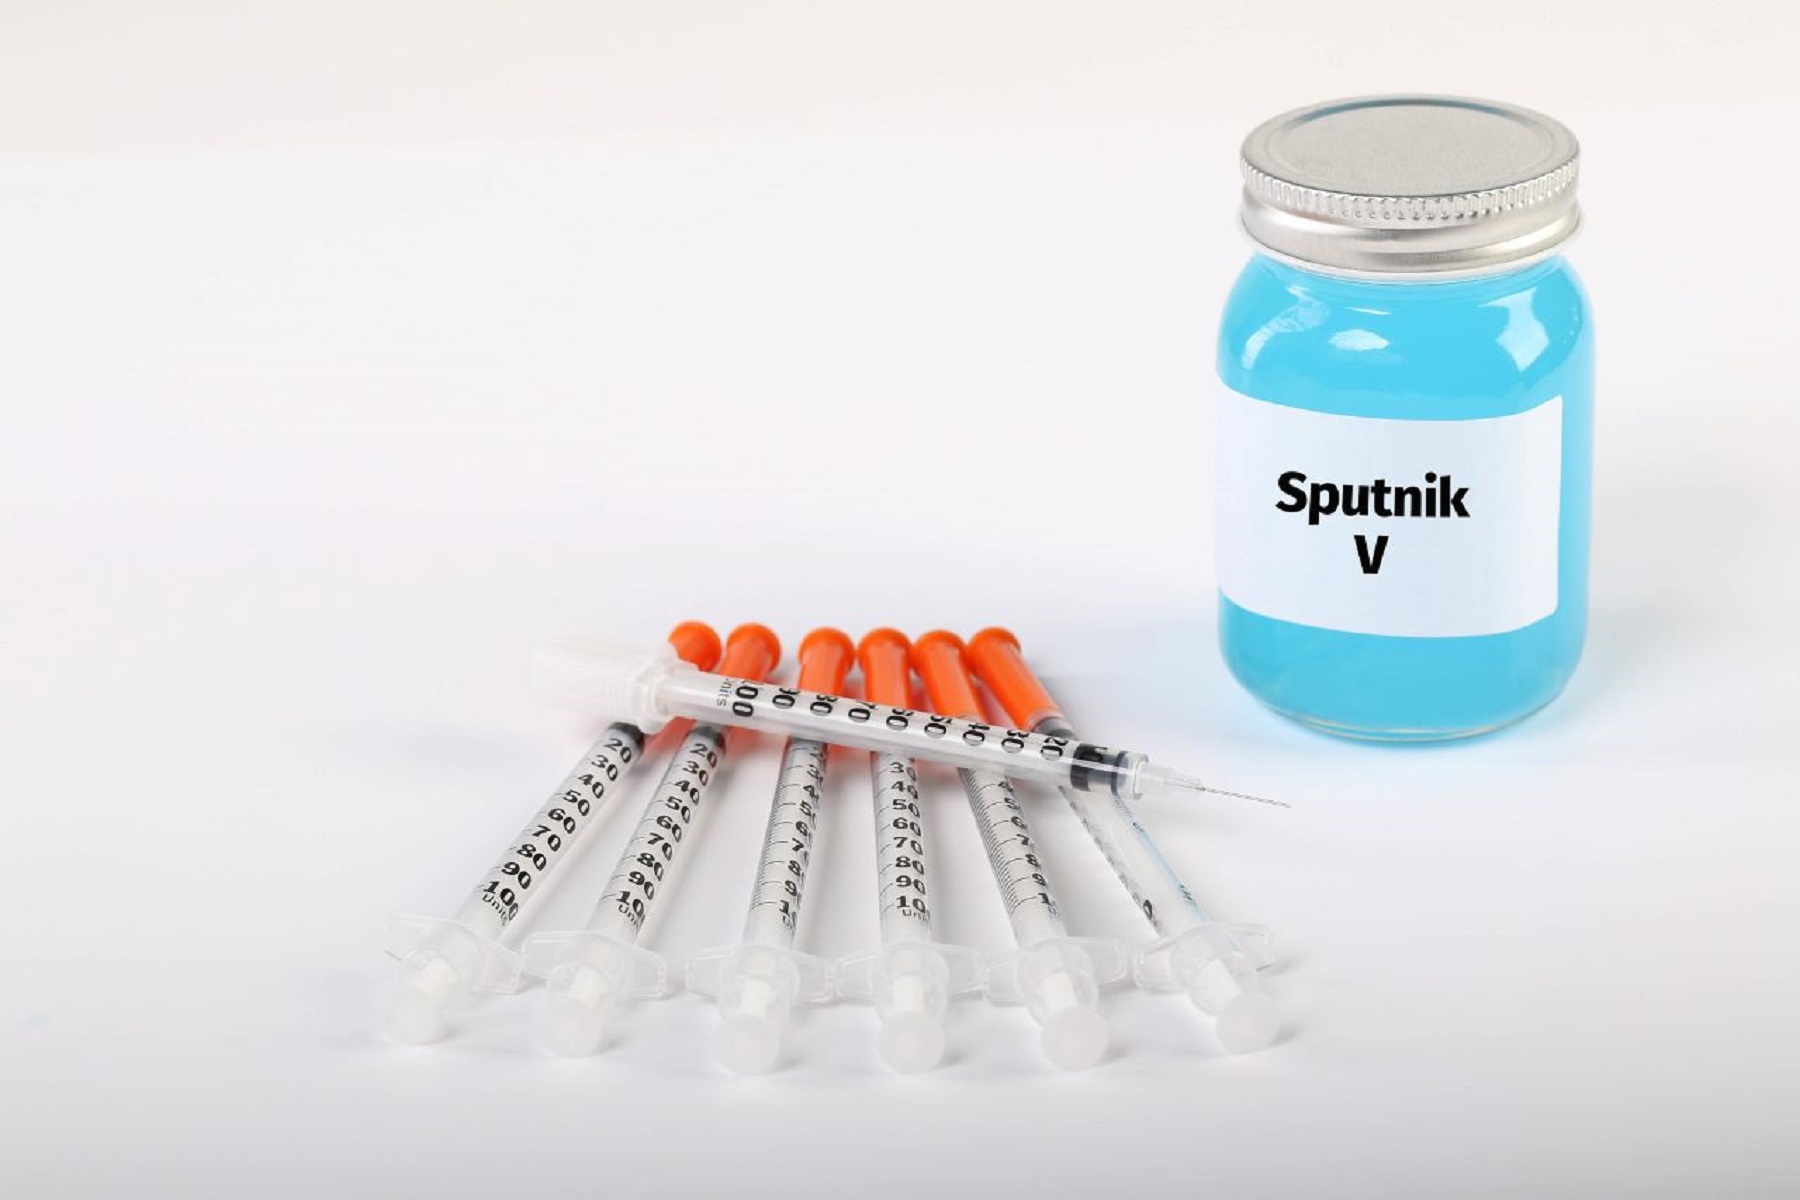 Sputnik-V Εμβόλιο: Το σκεύασμα έλαβε επιστημονική γνωμοδότηση ανακοινώνει ο Ευρωπαϊκός Οργανισμός Φαρμάκων